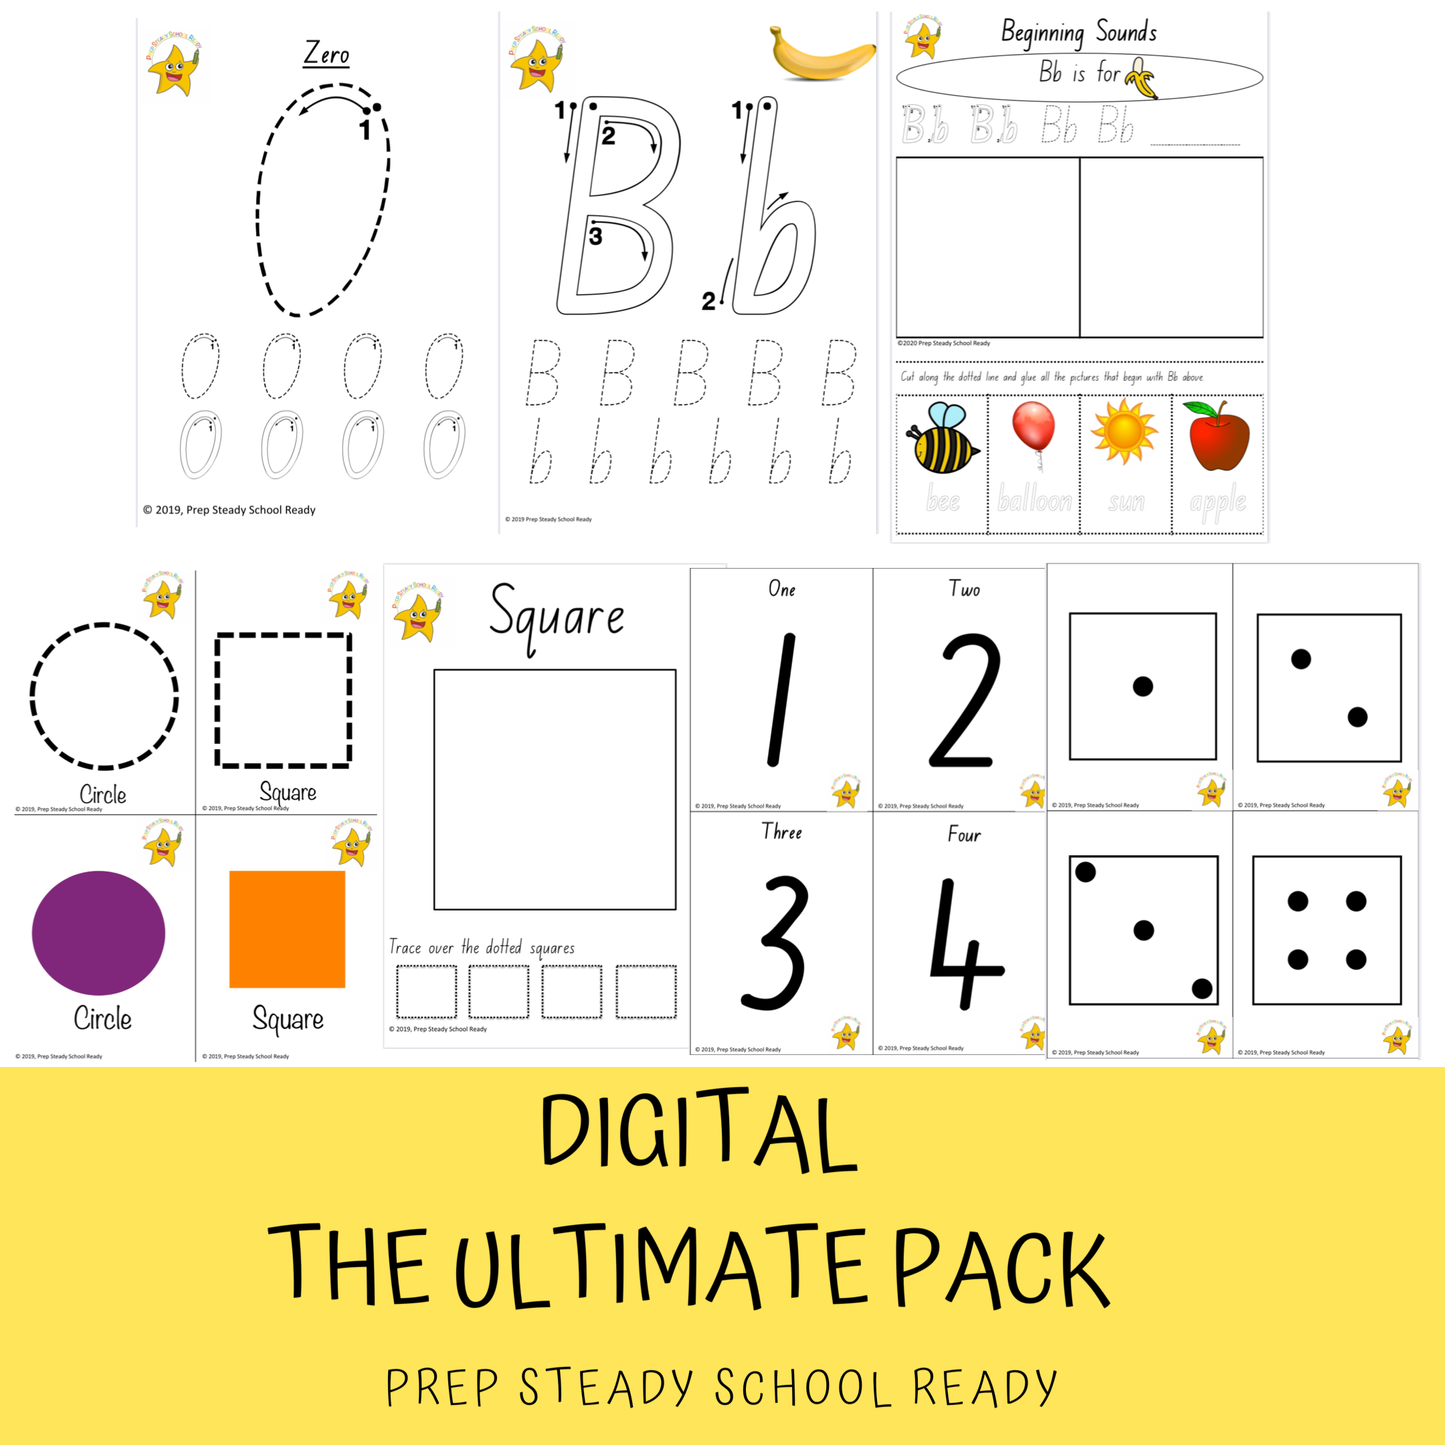 The Ultimate Pack TAS *Digital File*